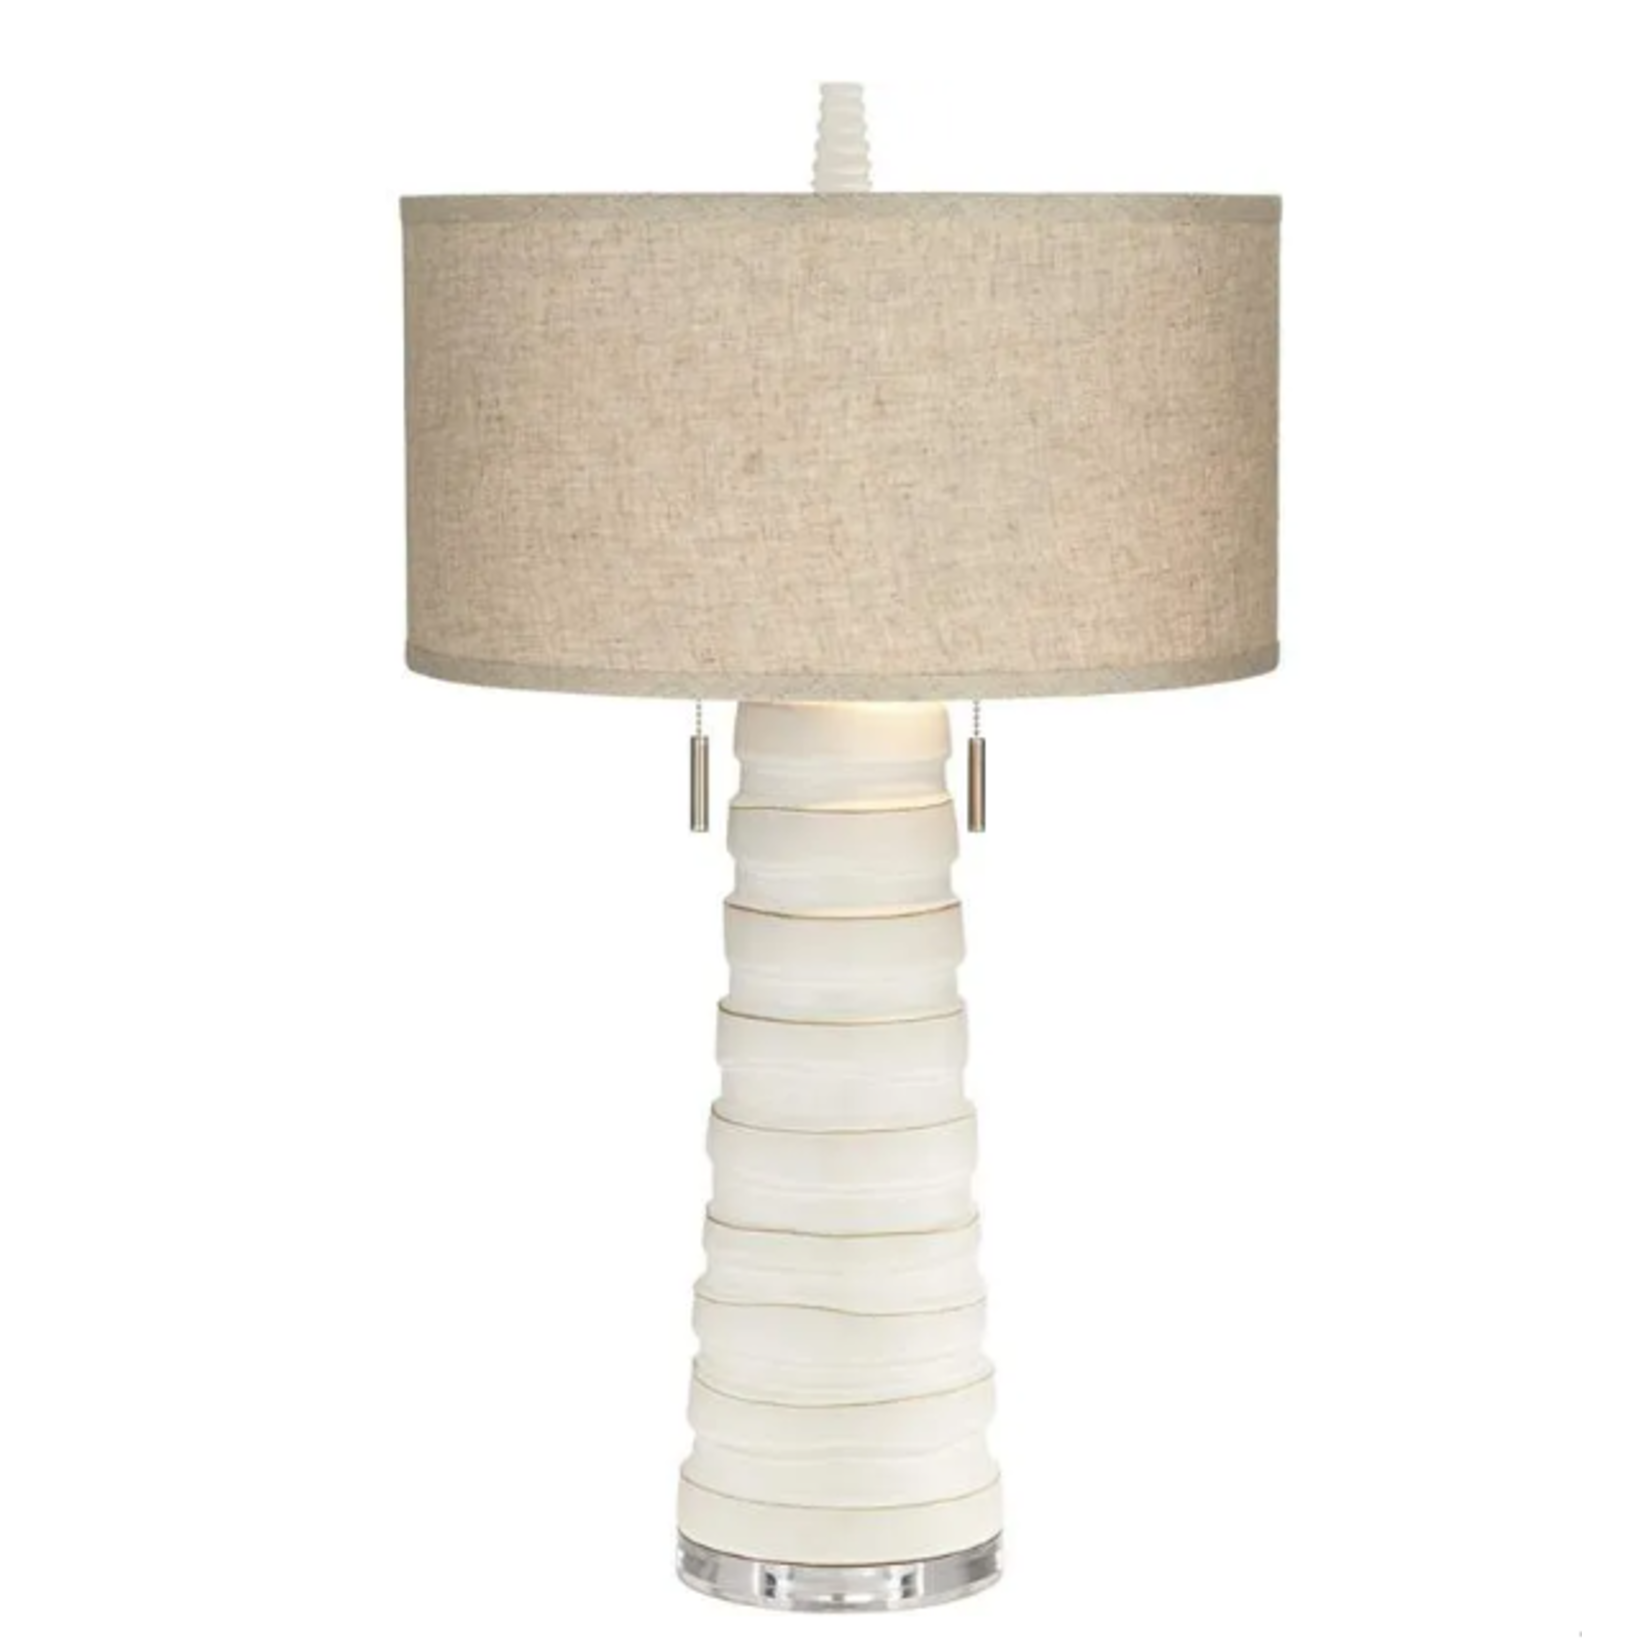 Mickler & Co. Manes Table Lamp